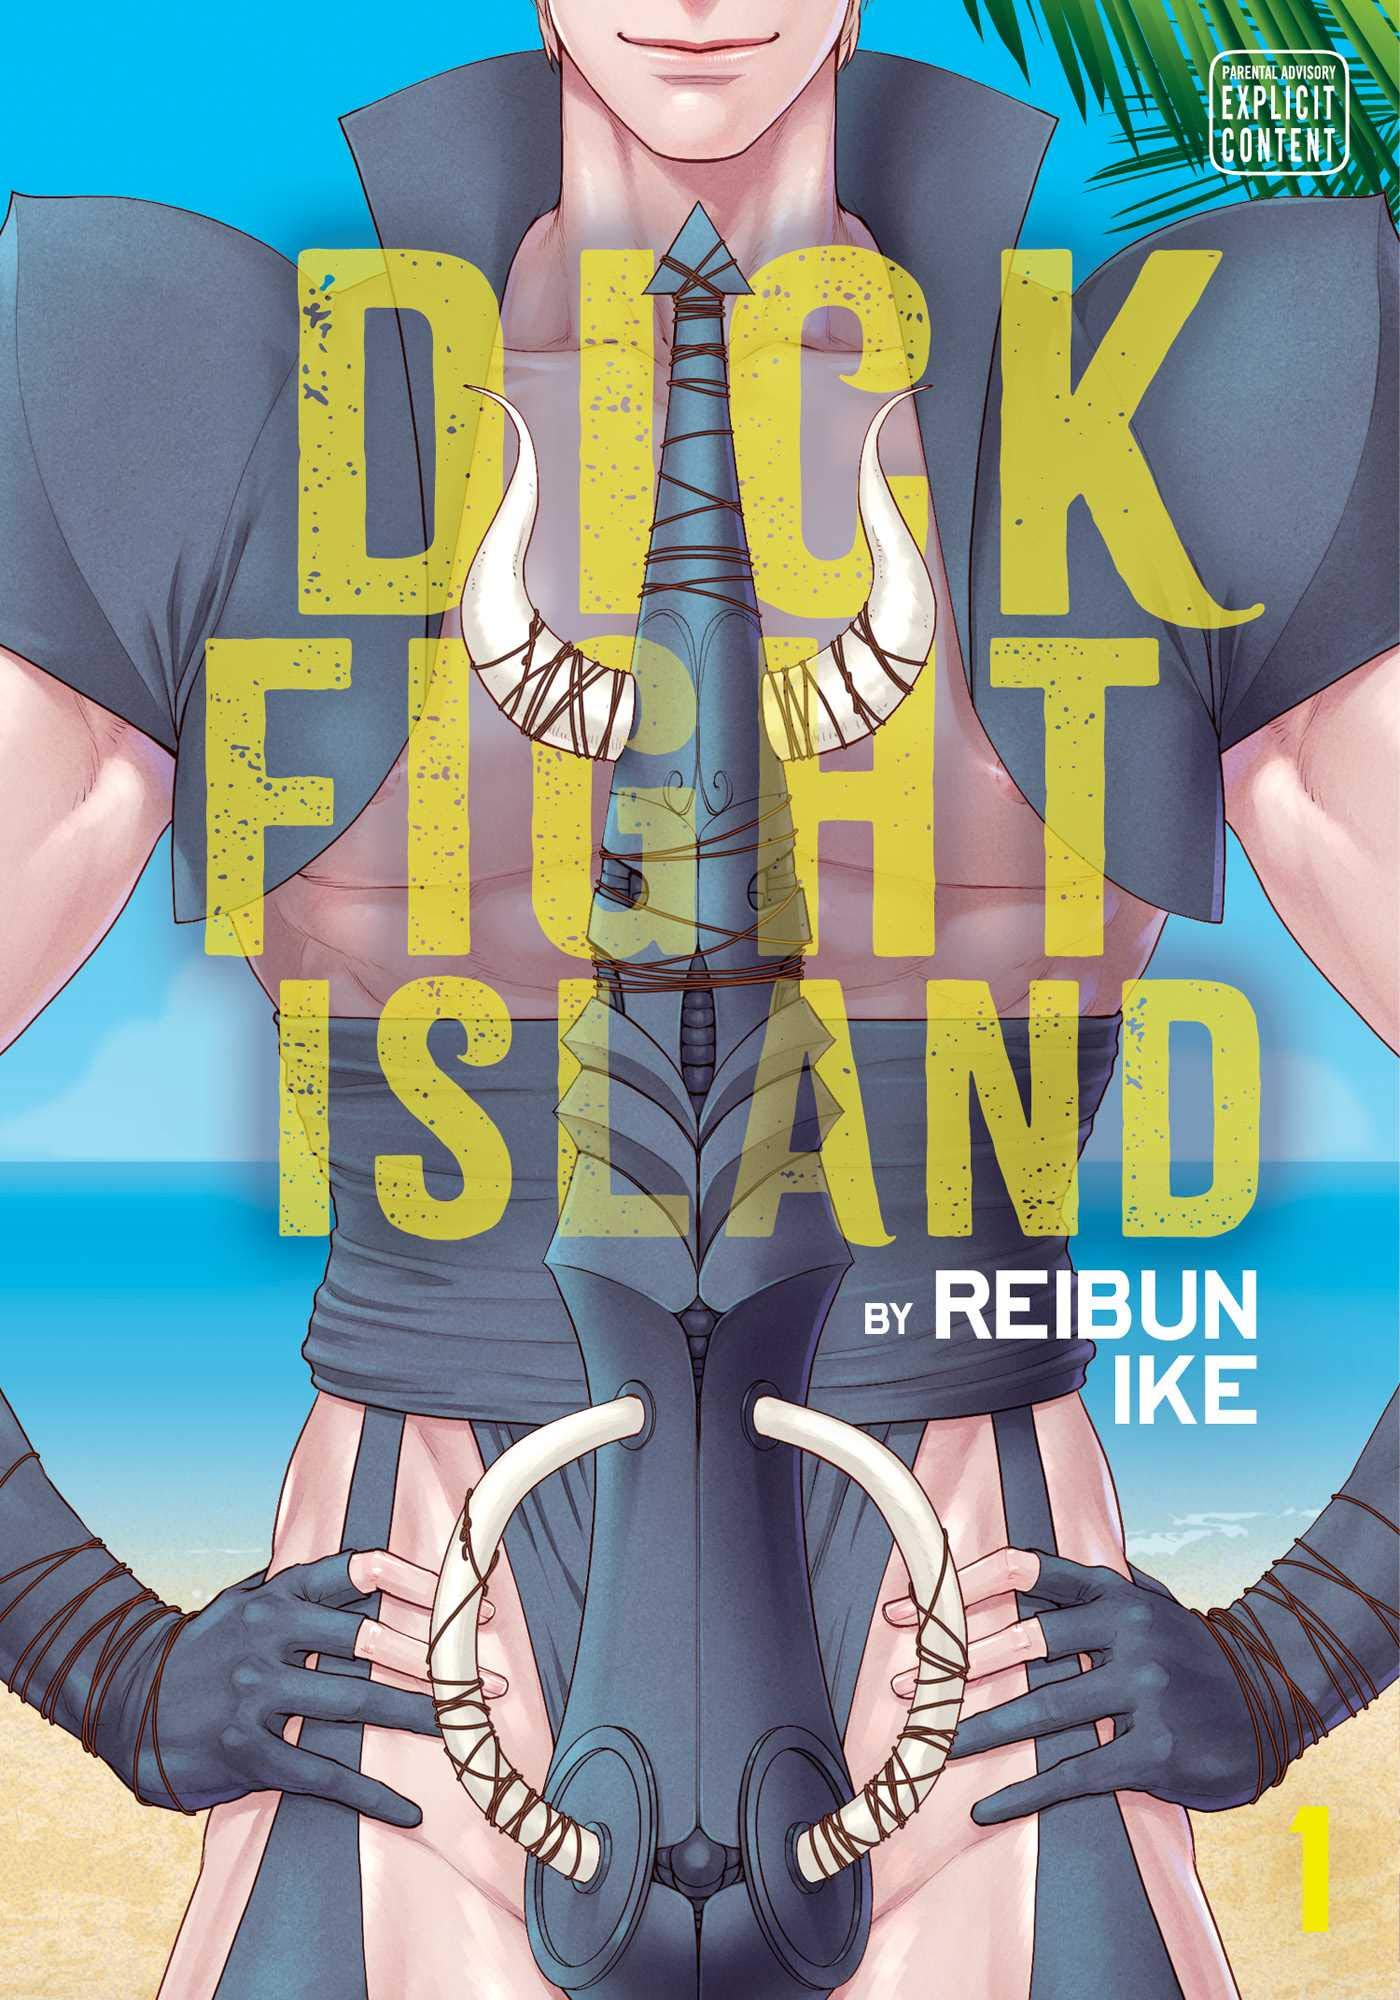 Dick Fight Island Vol. 1 by Reibun Ike